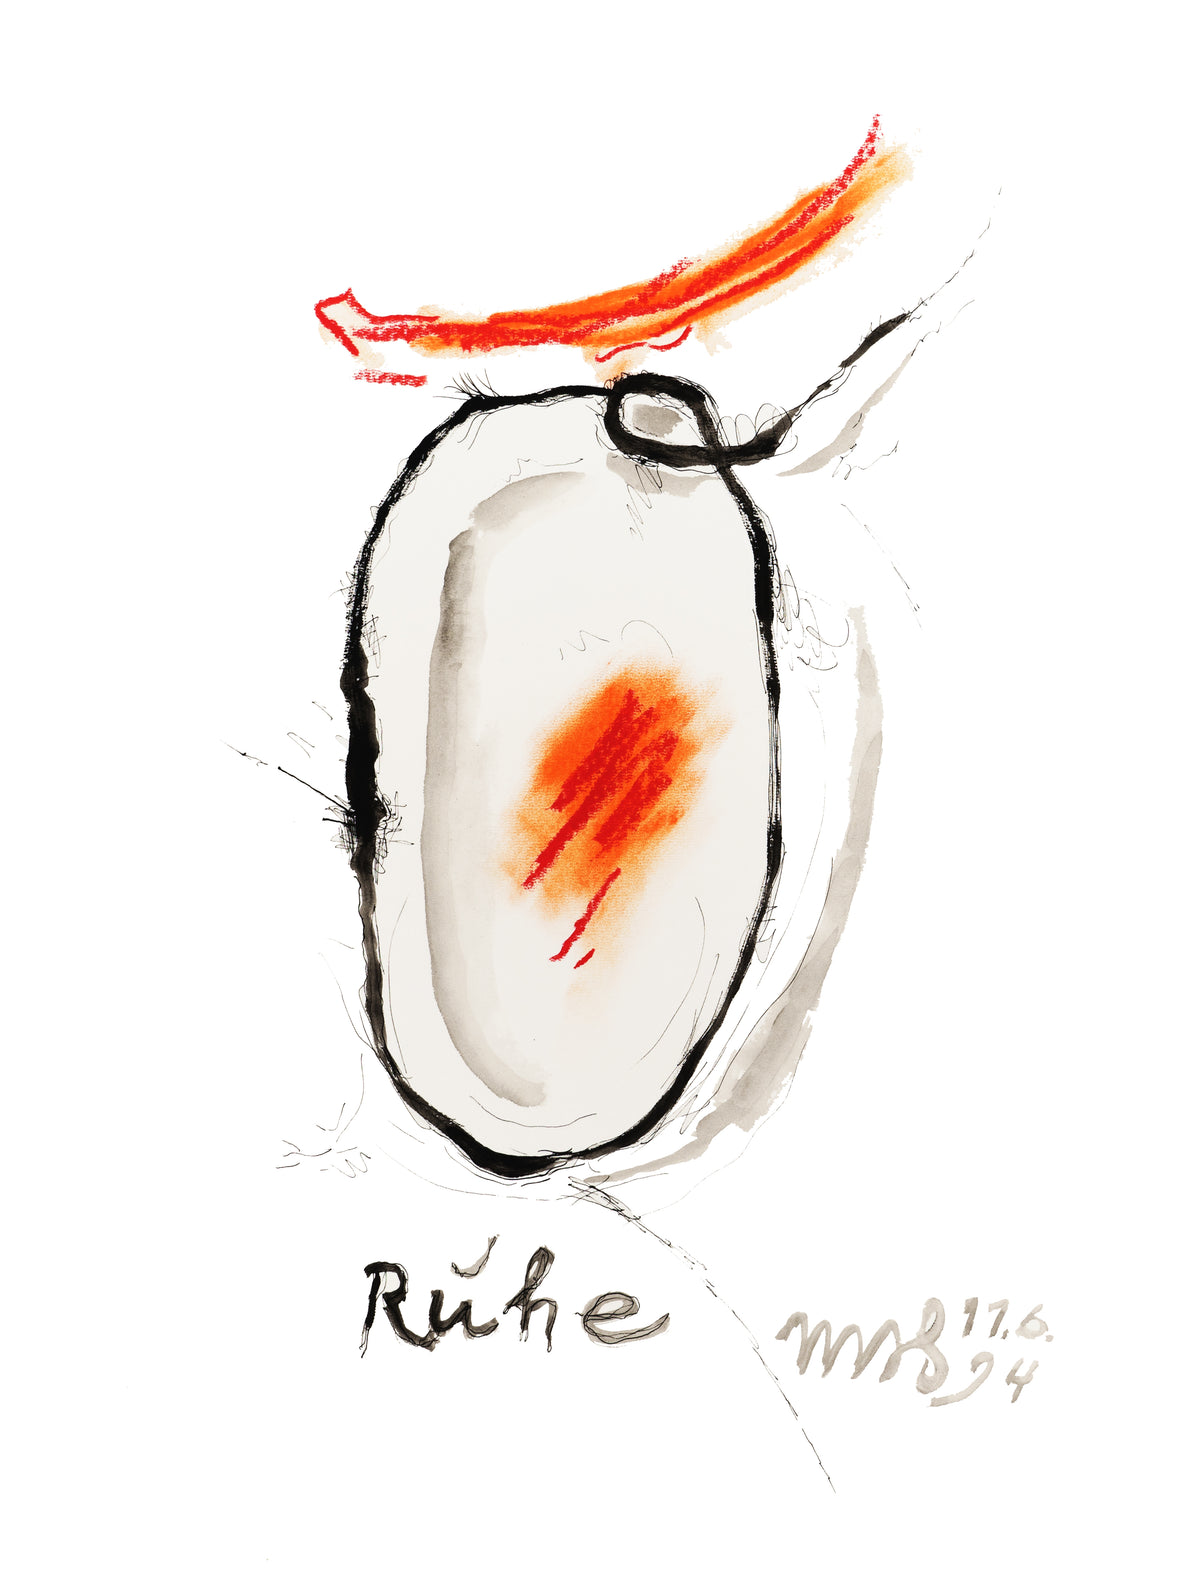 Ruhe (Silence) - Art Print from original drawing by Mathias Jakob Seib, Chalk, Ink, Paper, 40 x 52 cm 